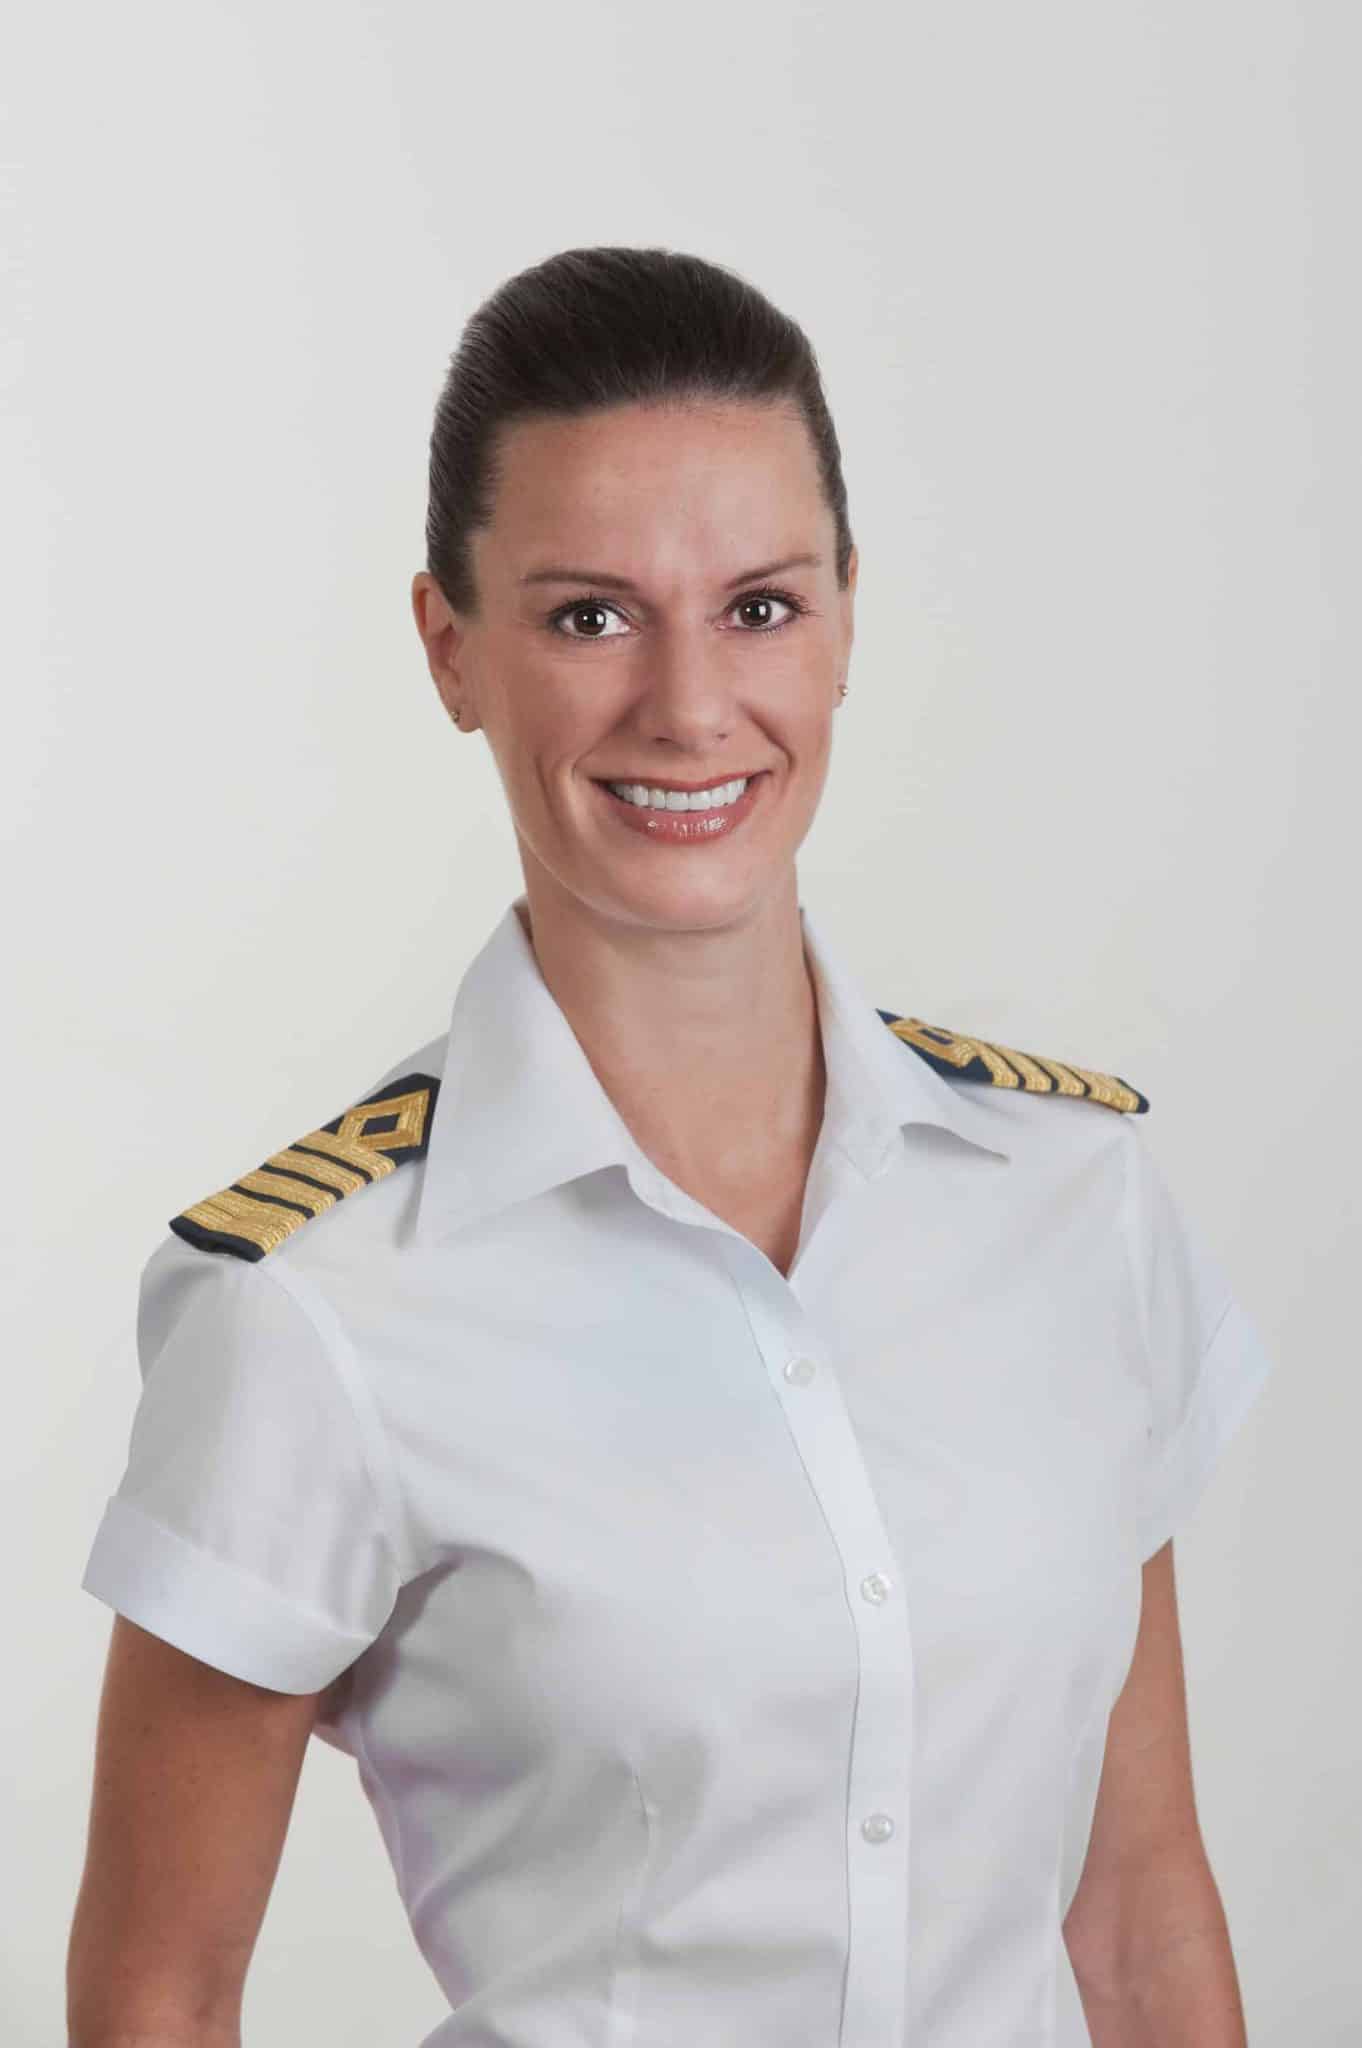 female cruise ship captain fired